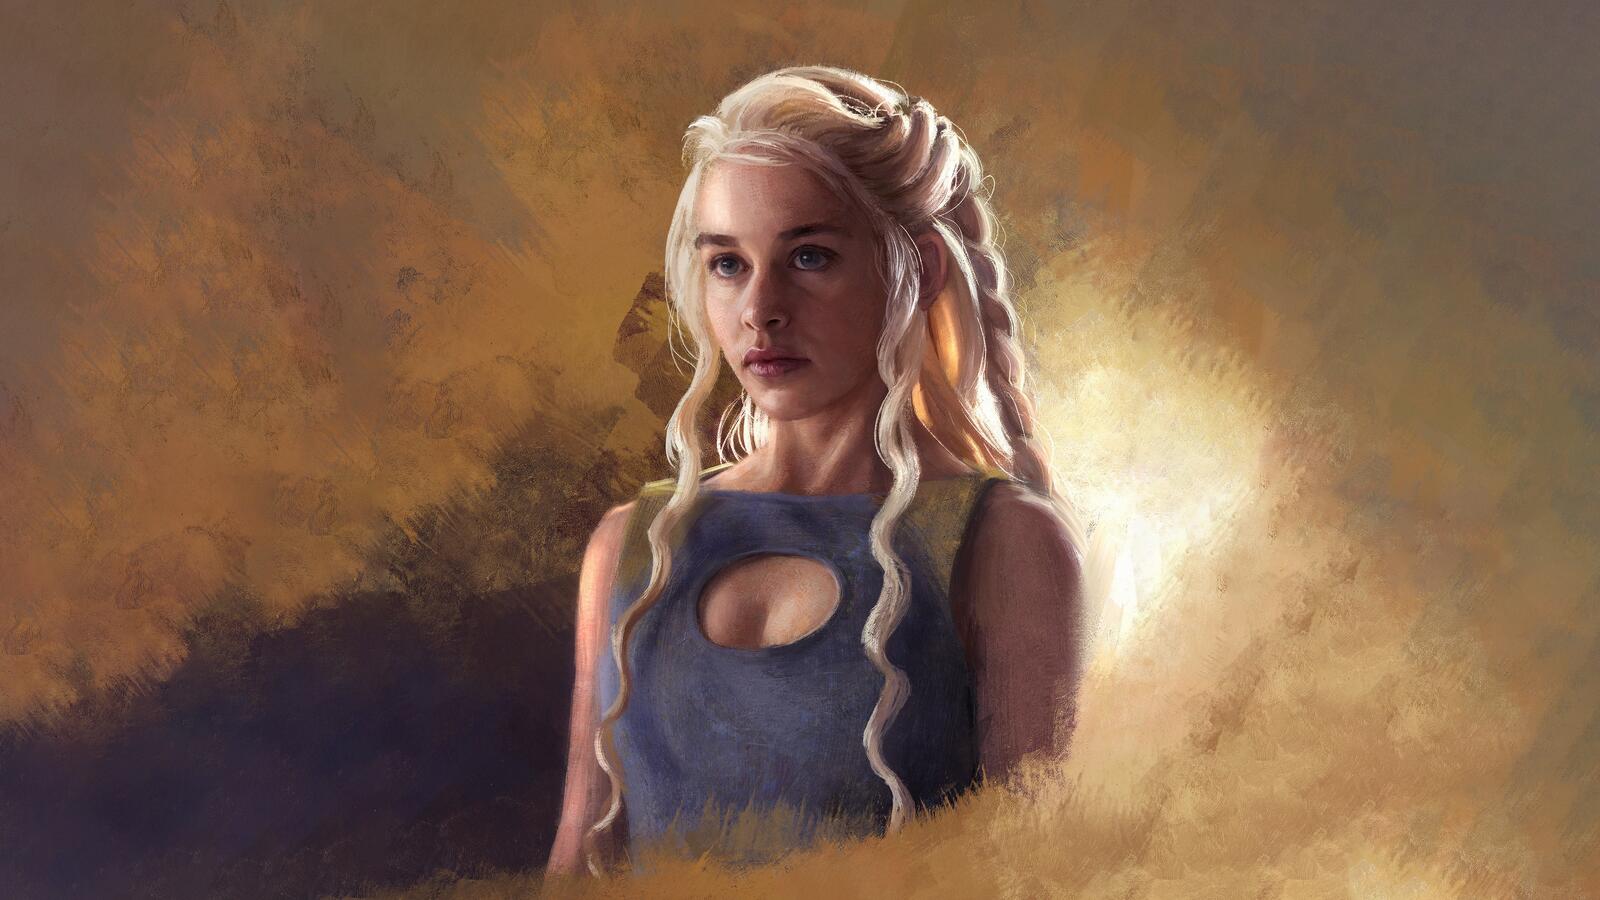 Wallpapers Game Of Thrones Daenerys Targaryen painting on the desktop